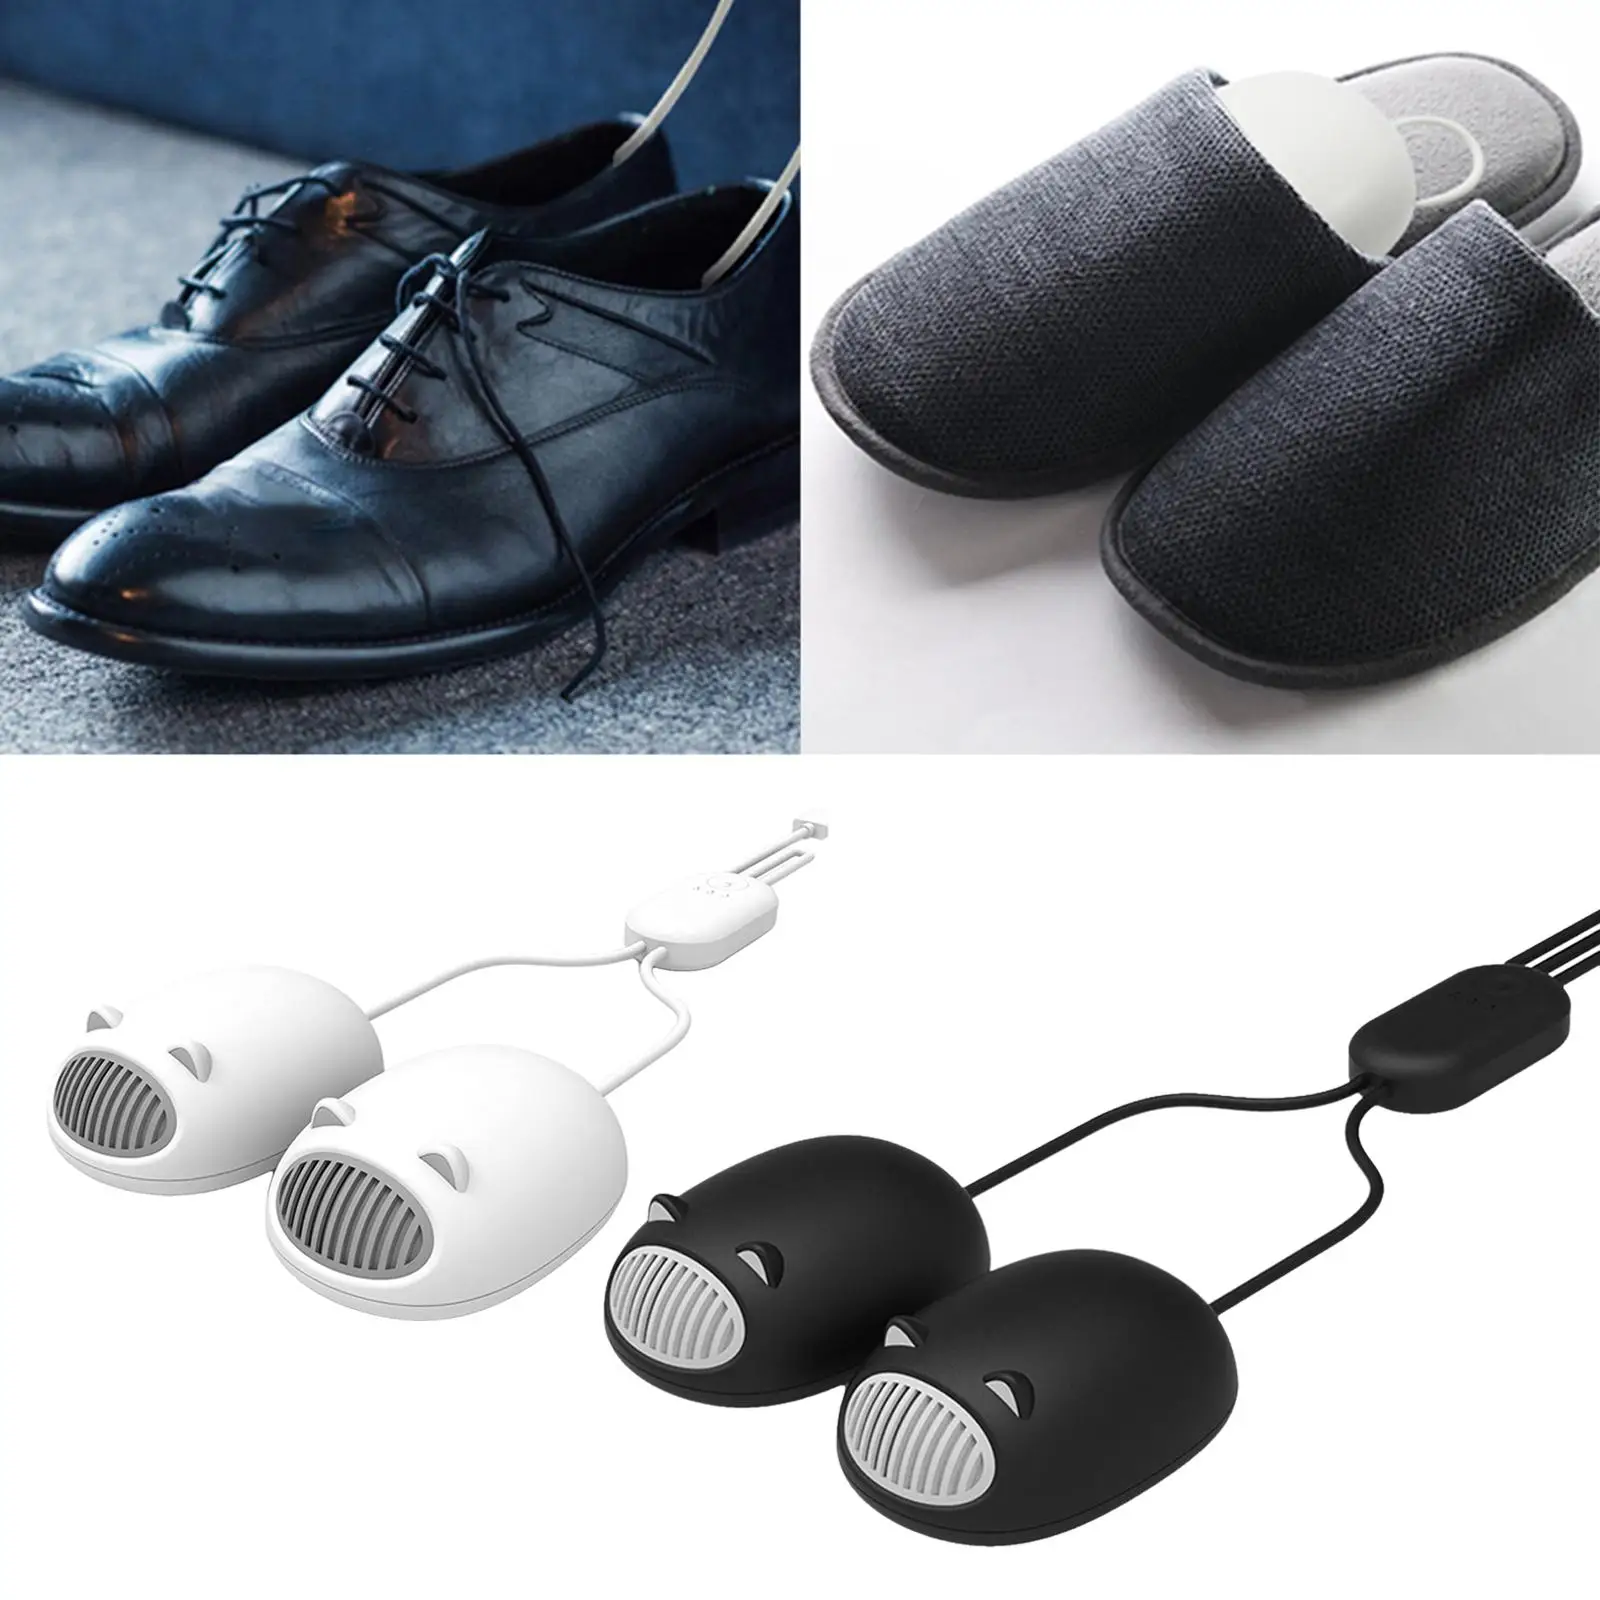 Portable Boot Shoe Dryer Fast Dryer Eliminate Bad Odor Household No Noise Length Adjustable Mini Socks Shoes Gloves Hats